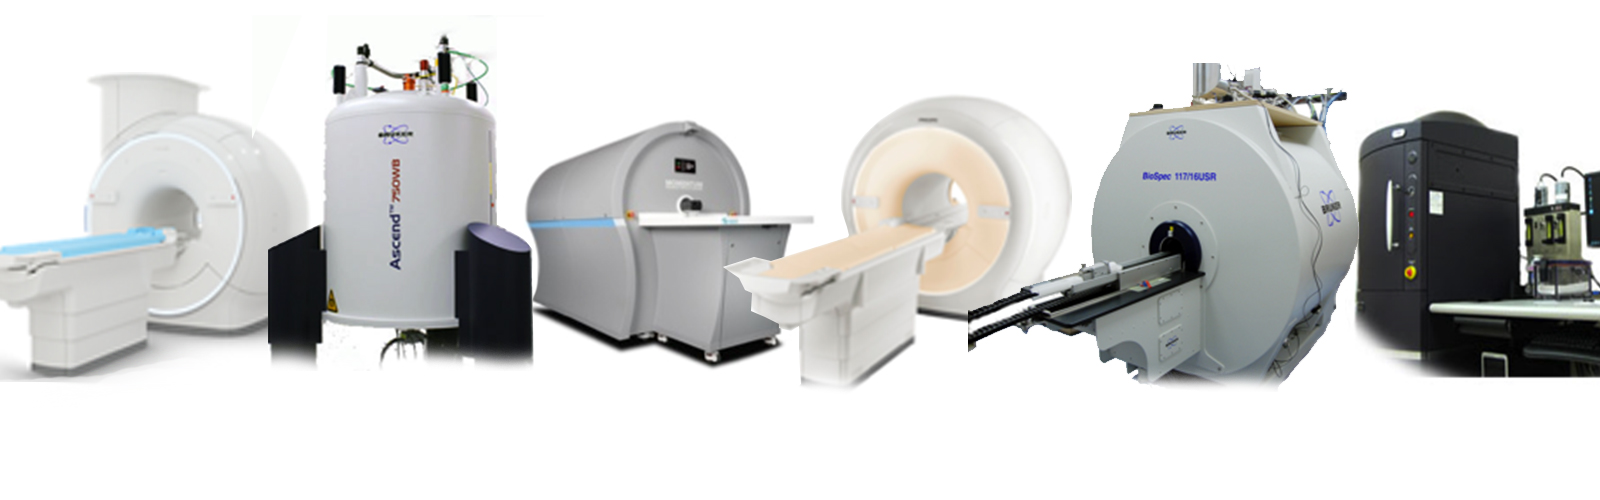 MRI Facilities Equipment